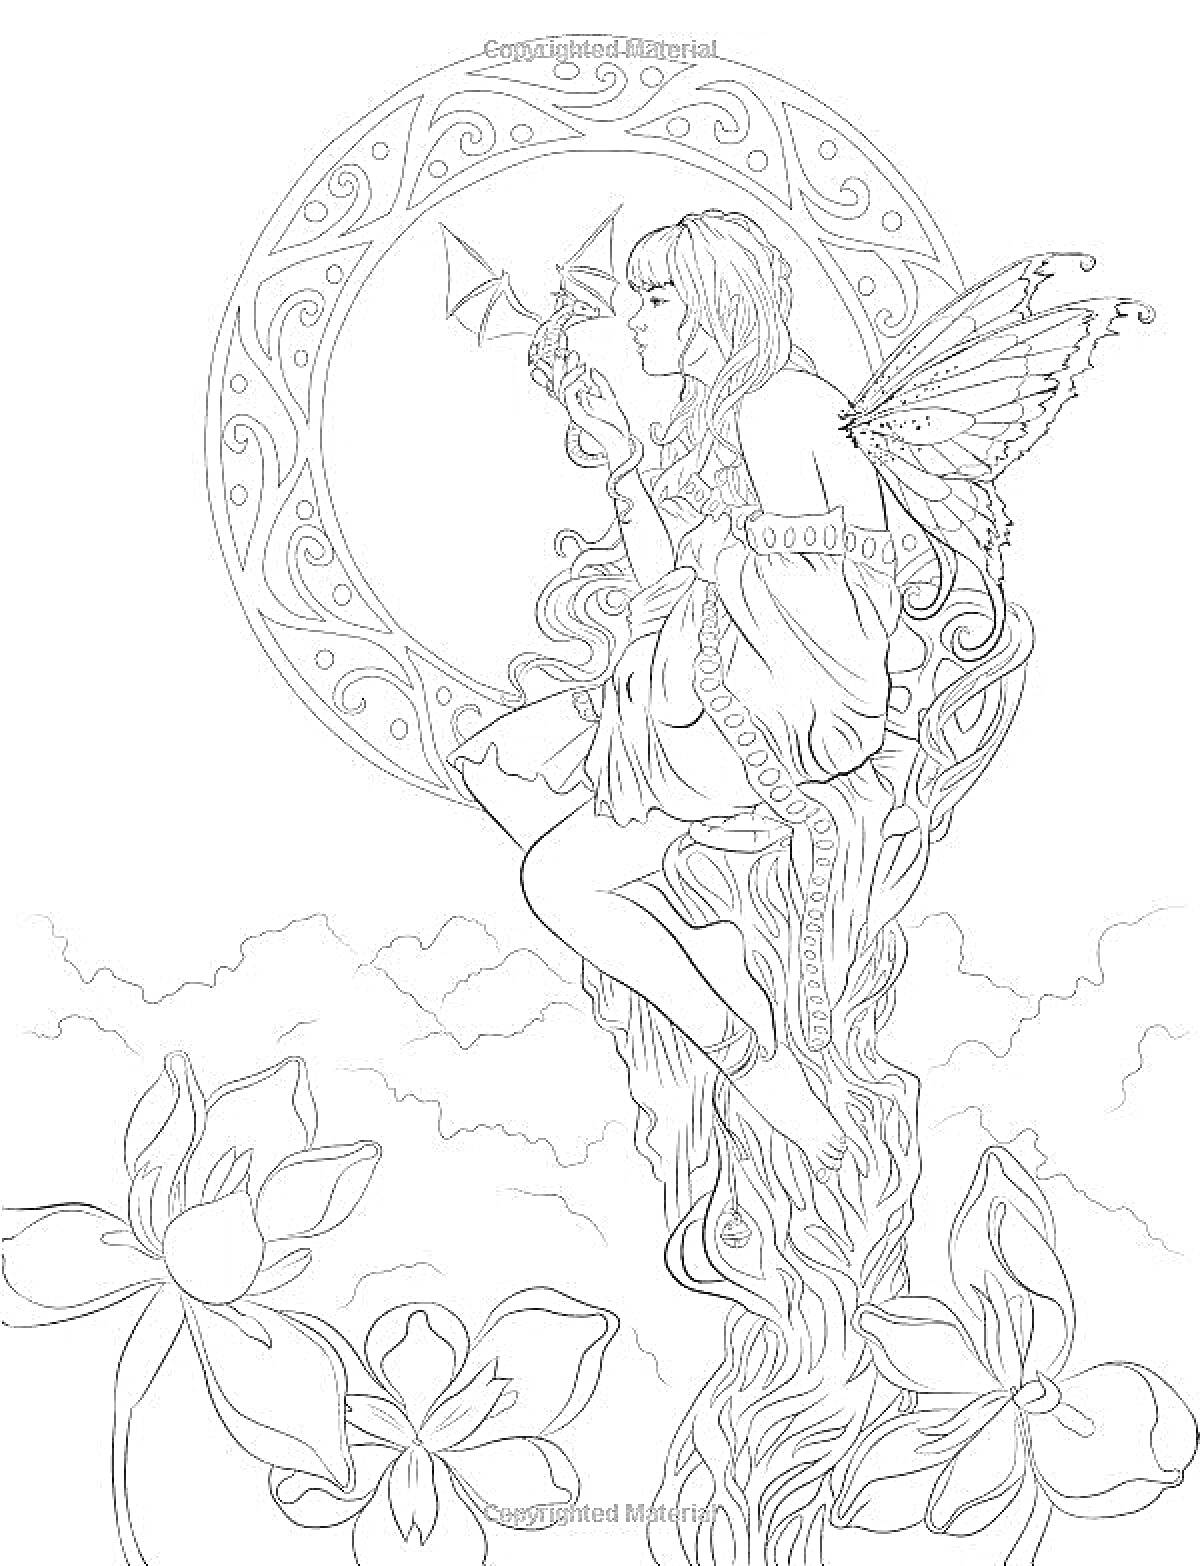 Раскраска Фея с крыльями, сидящая на стебле цветка, с бабочками и орнаментом круга на заднем плане